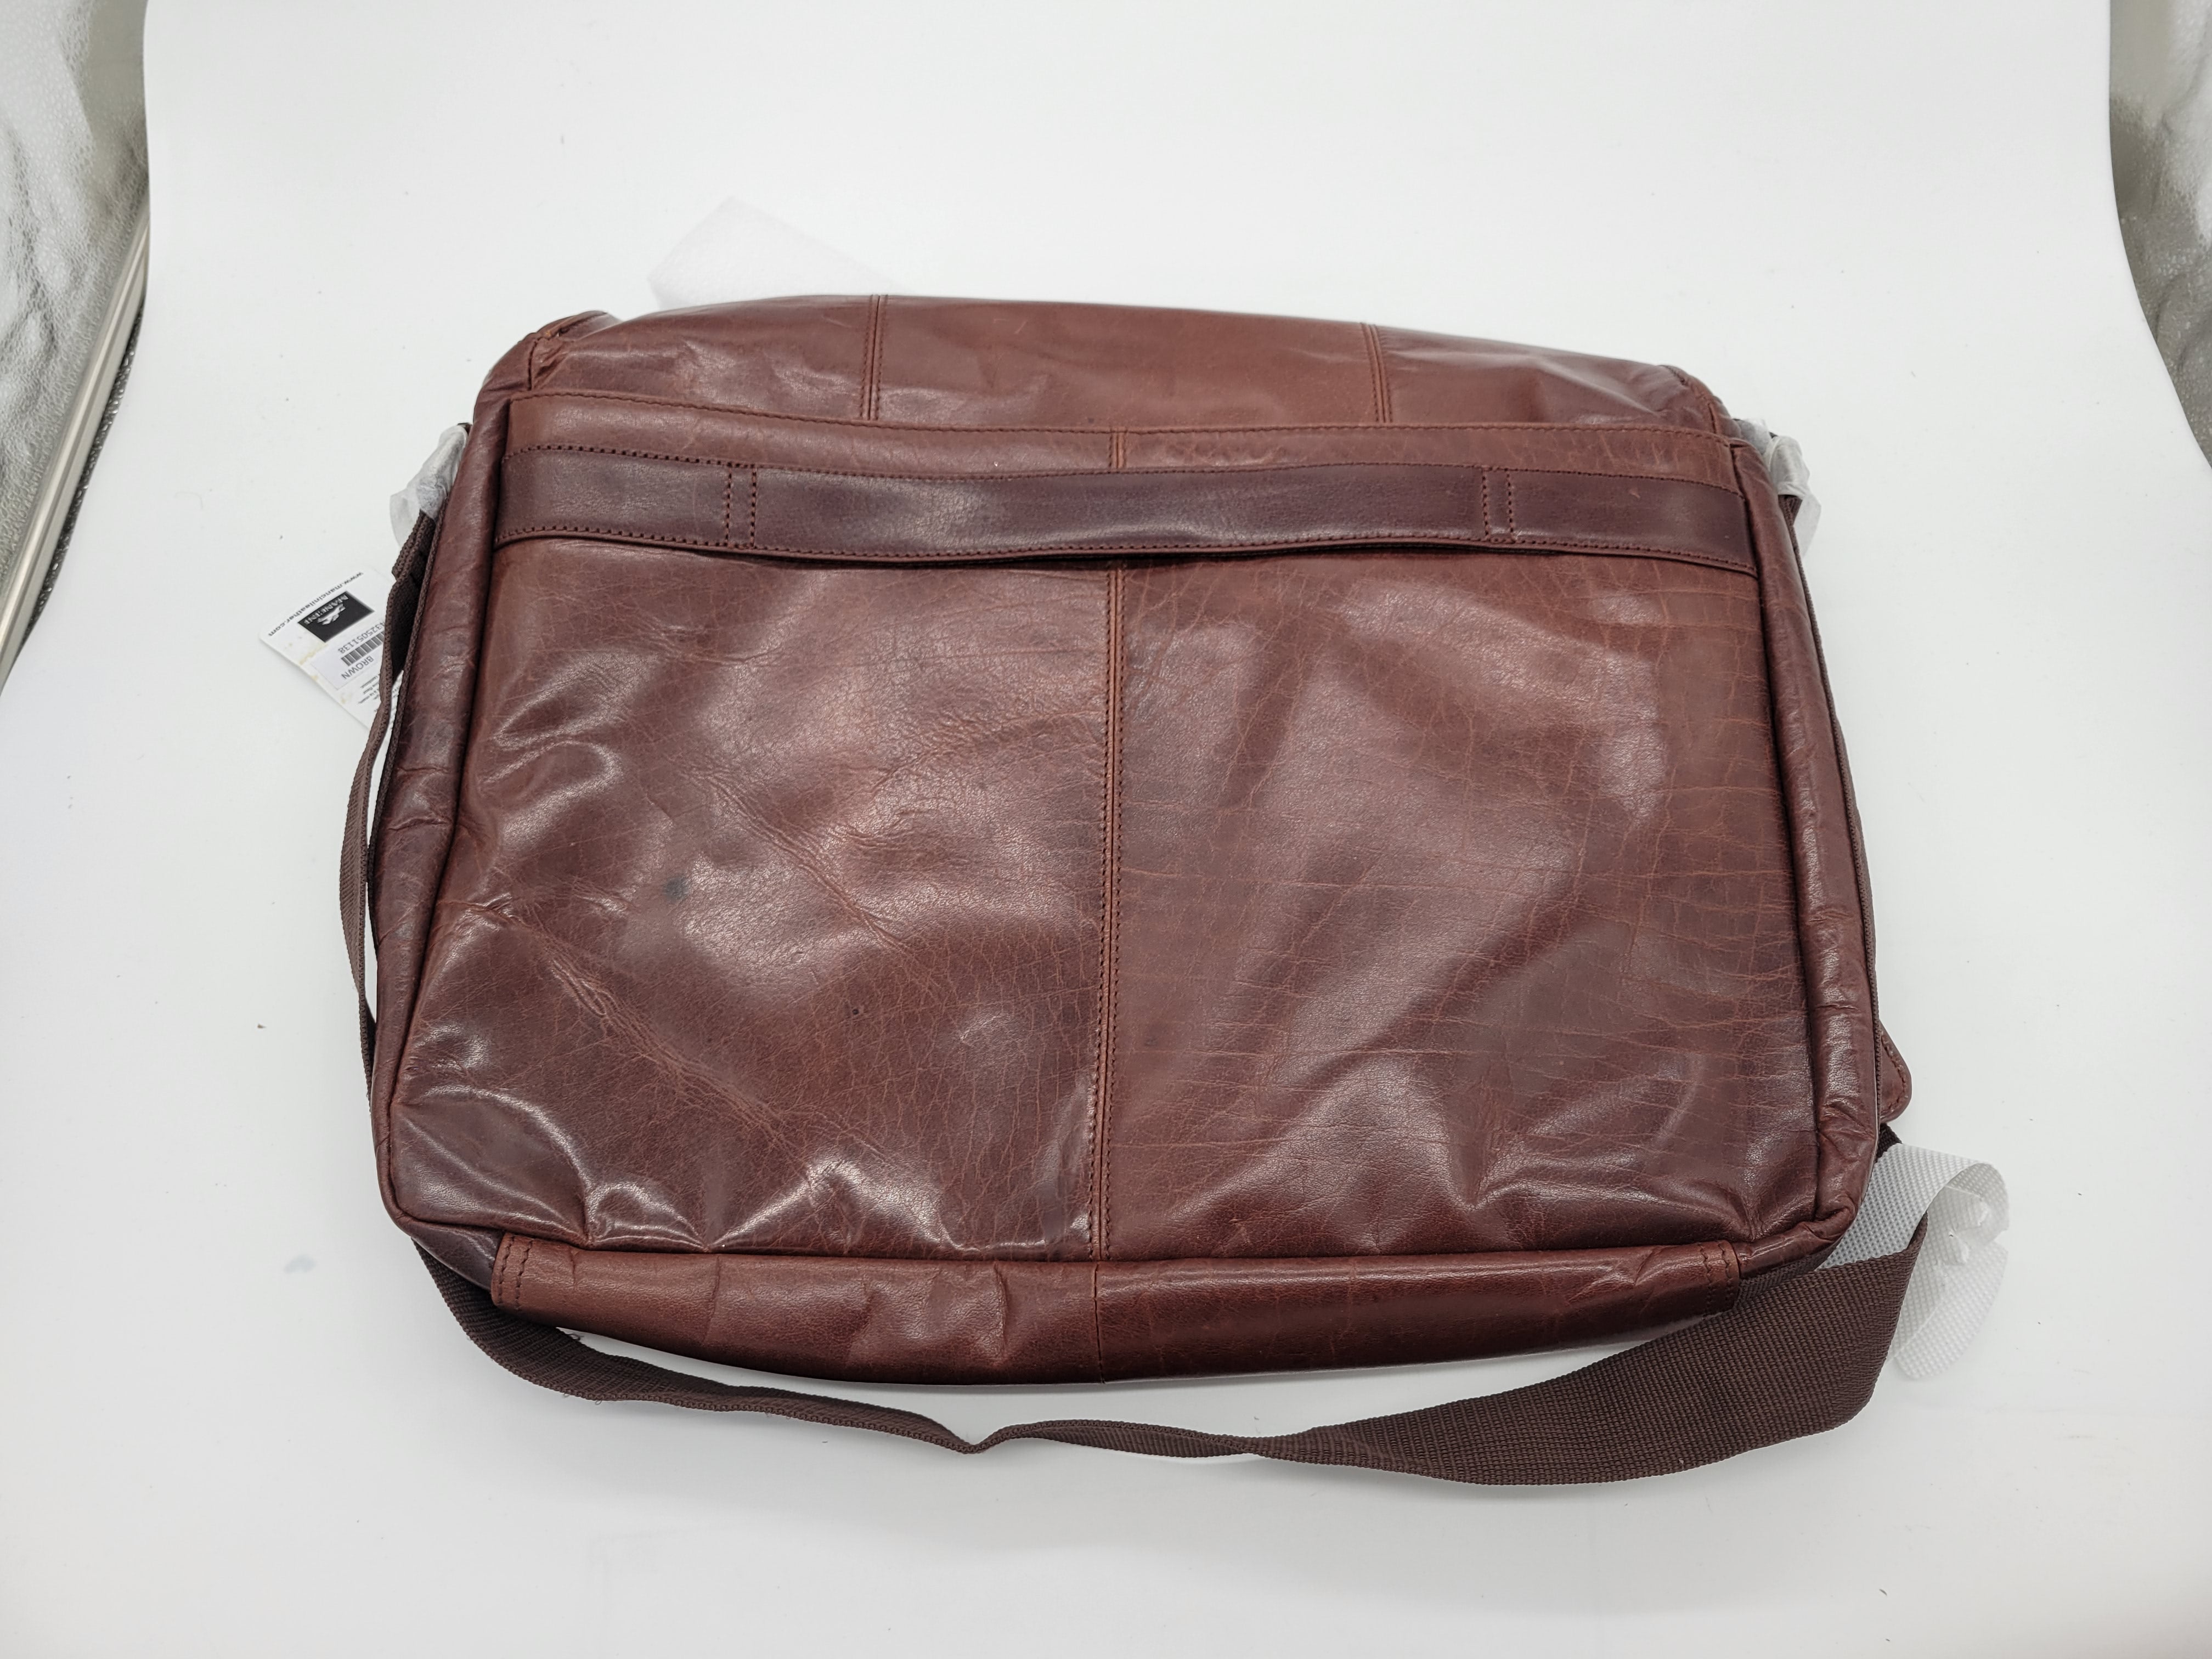 MANCINI Buffalo Collection Laptop/ Tablet Messenger Bag